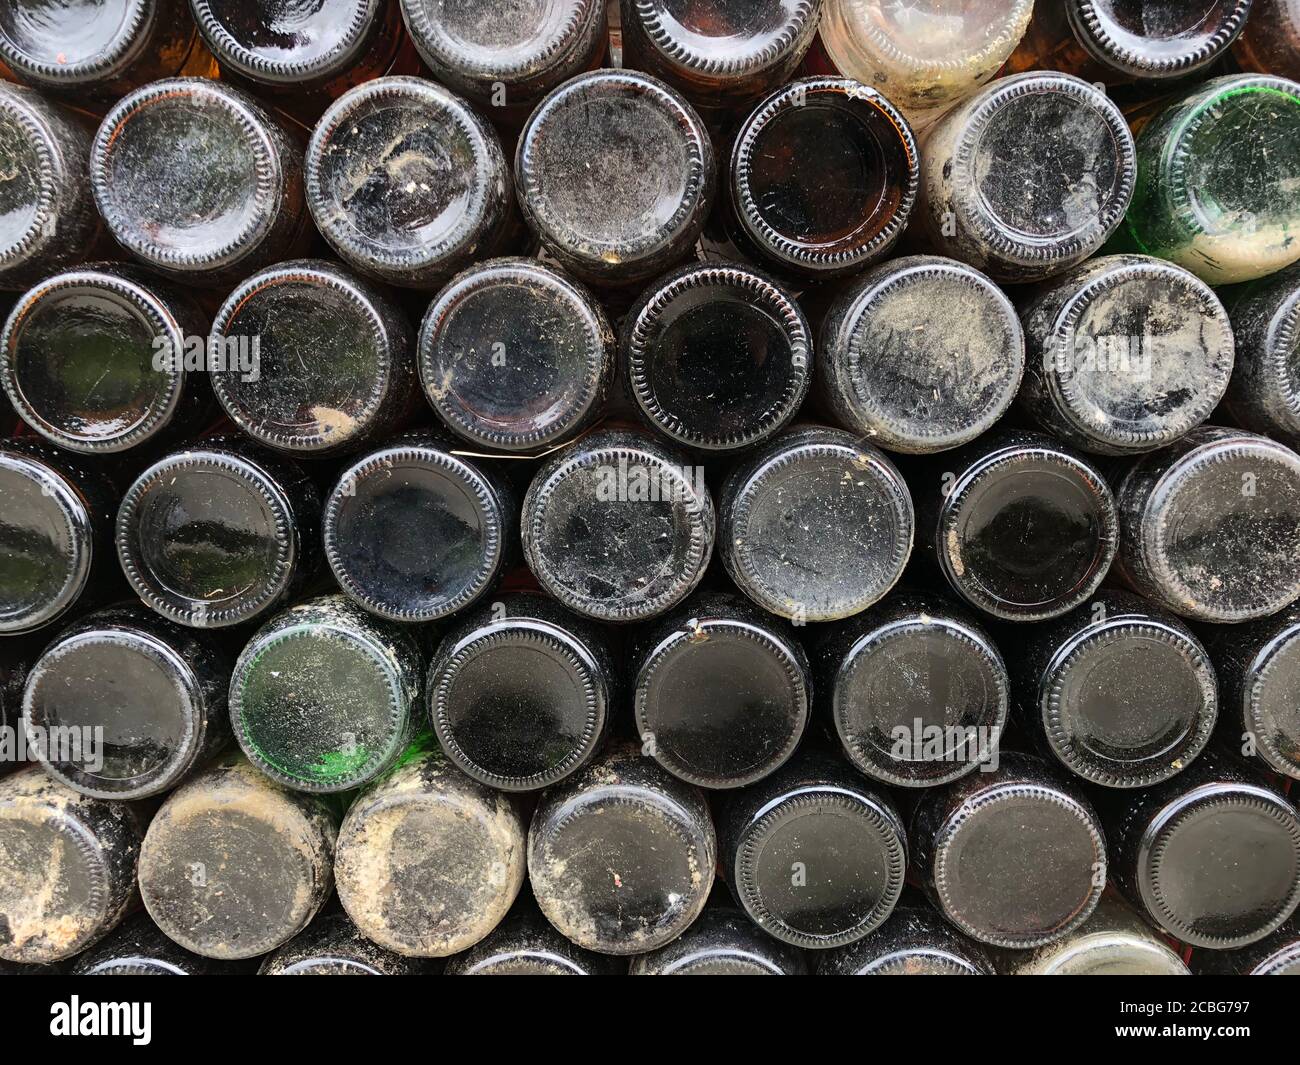 Bottiglie in vetro impilate e visibili dal basso Foto Stock